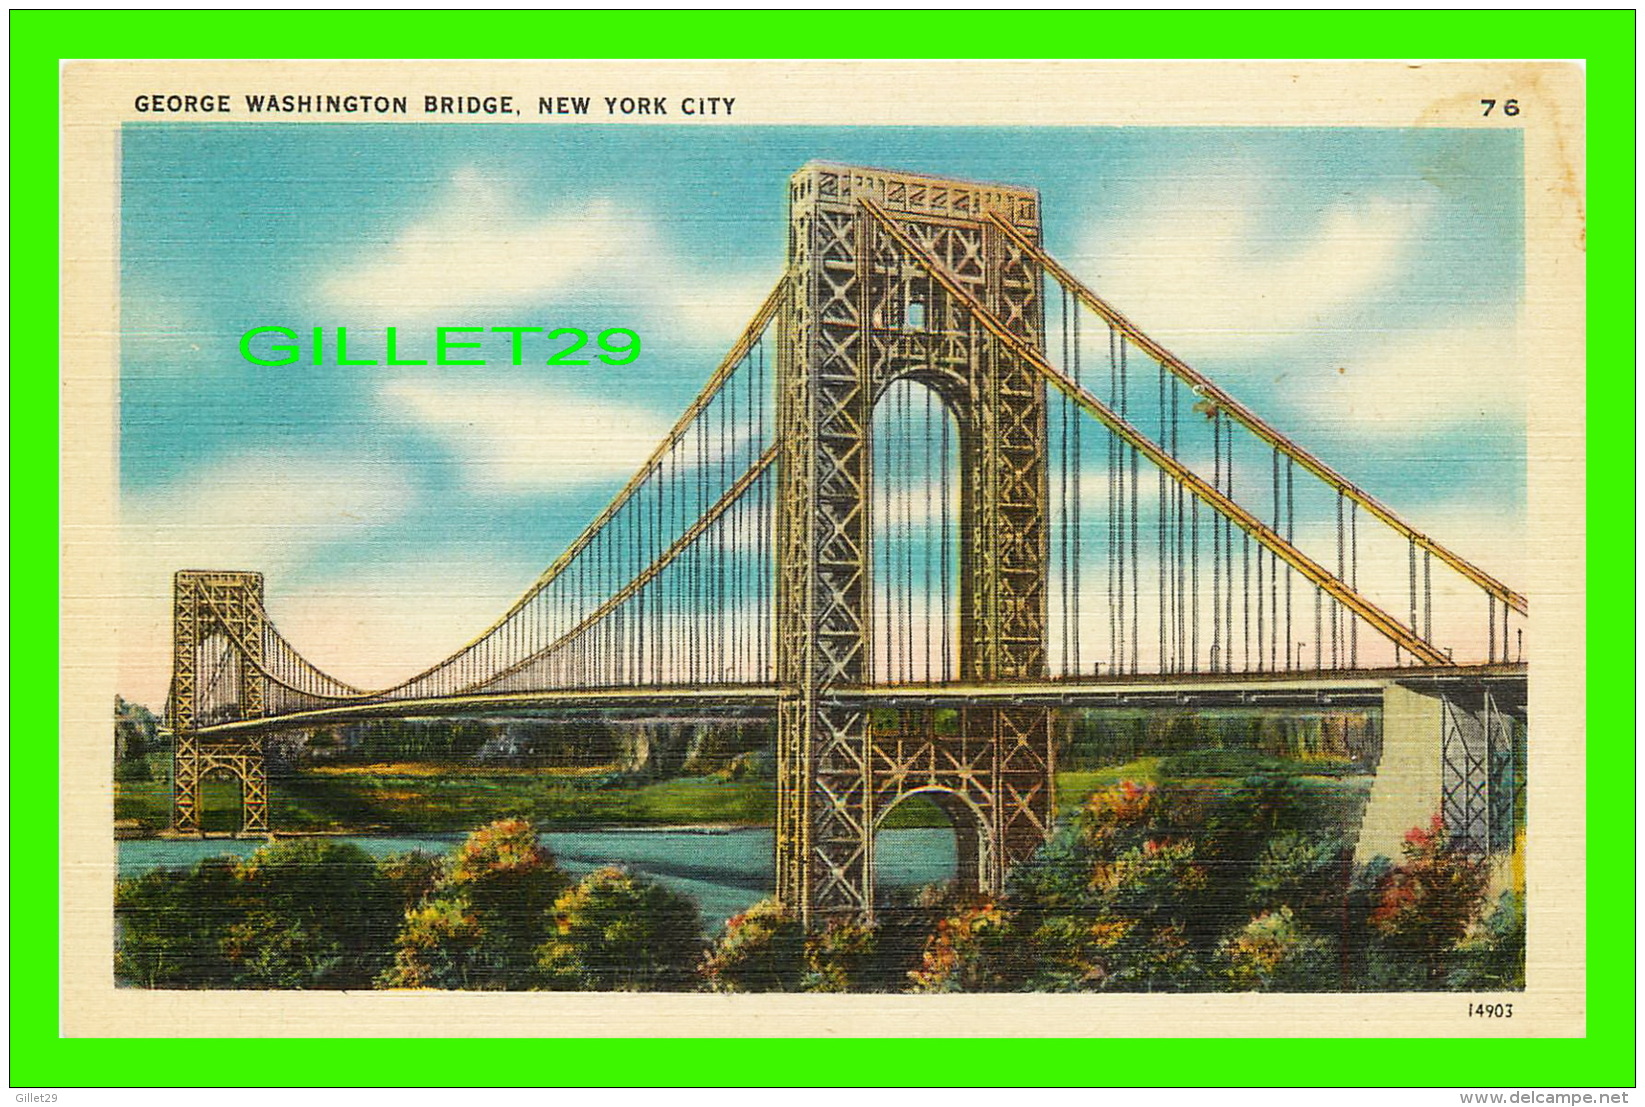 NEW YORK CITY, NY - GEORGE WASHINGTON BRIDGE -  ALFRED MAINZER - - Bridges & Tunnels